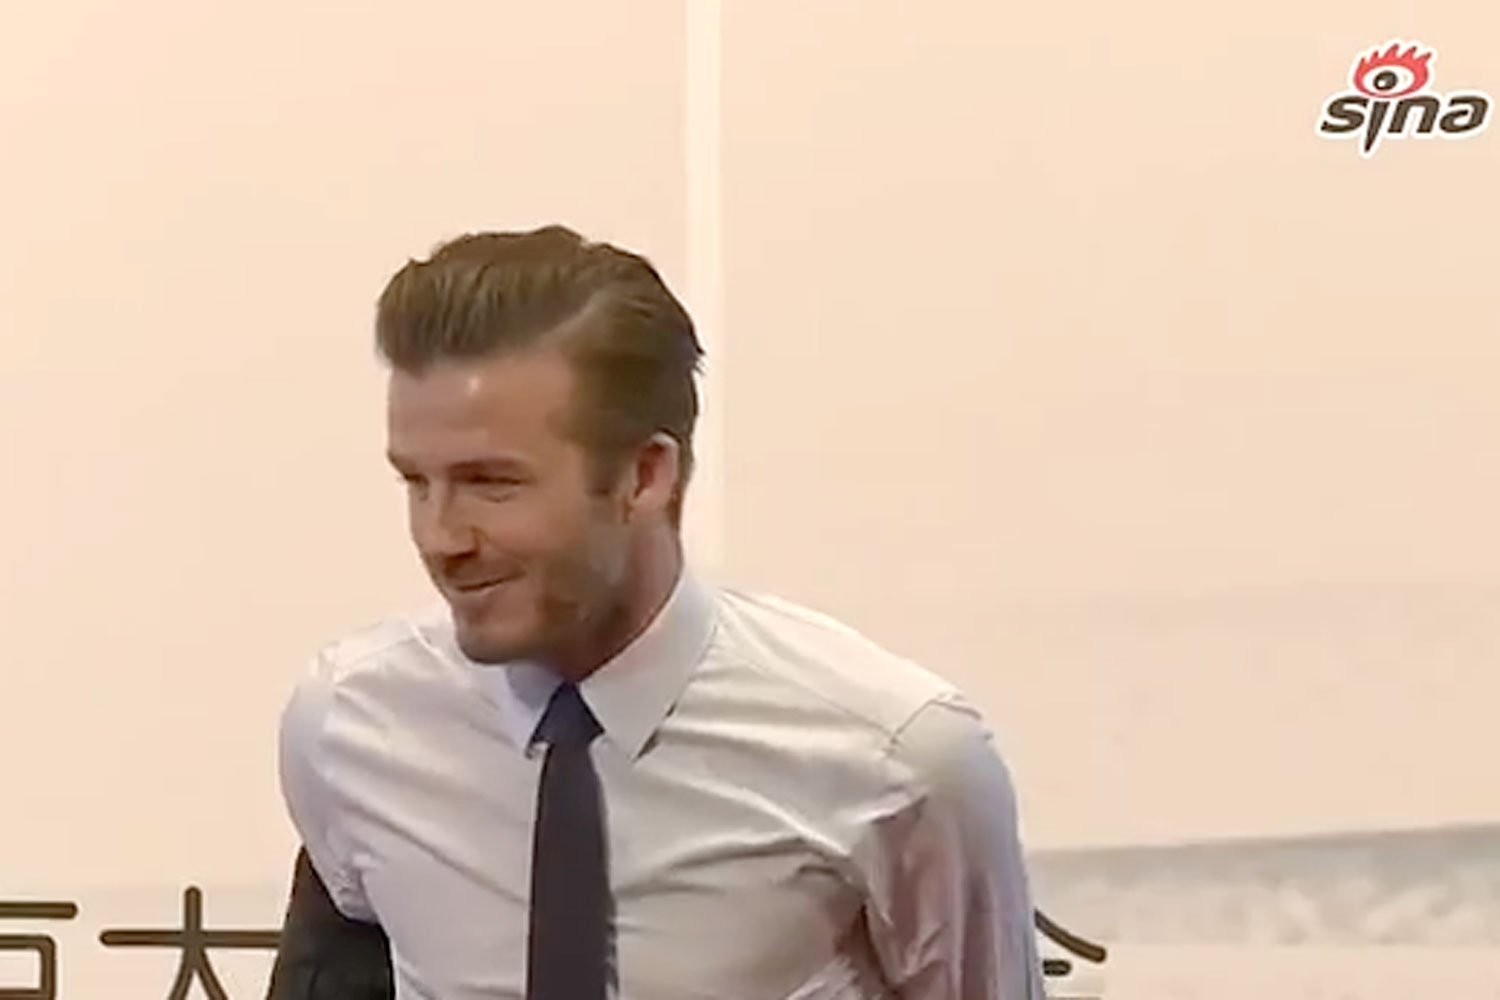 That must have hurt David Beckham shows off his Chinese tattoo  Celebrity  News  Showbiz  TV  Expresscouk